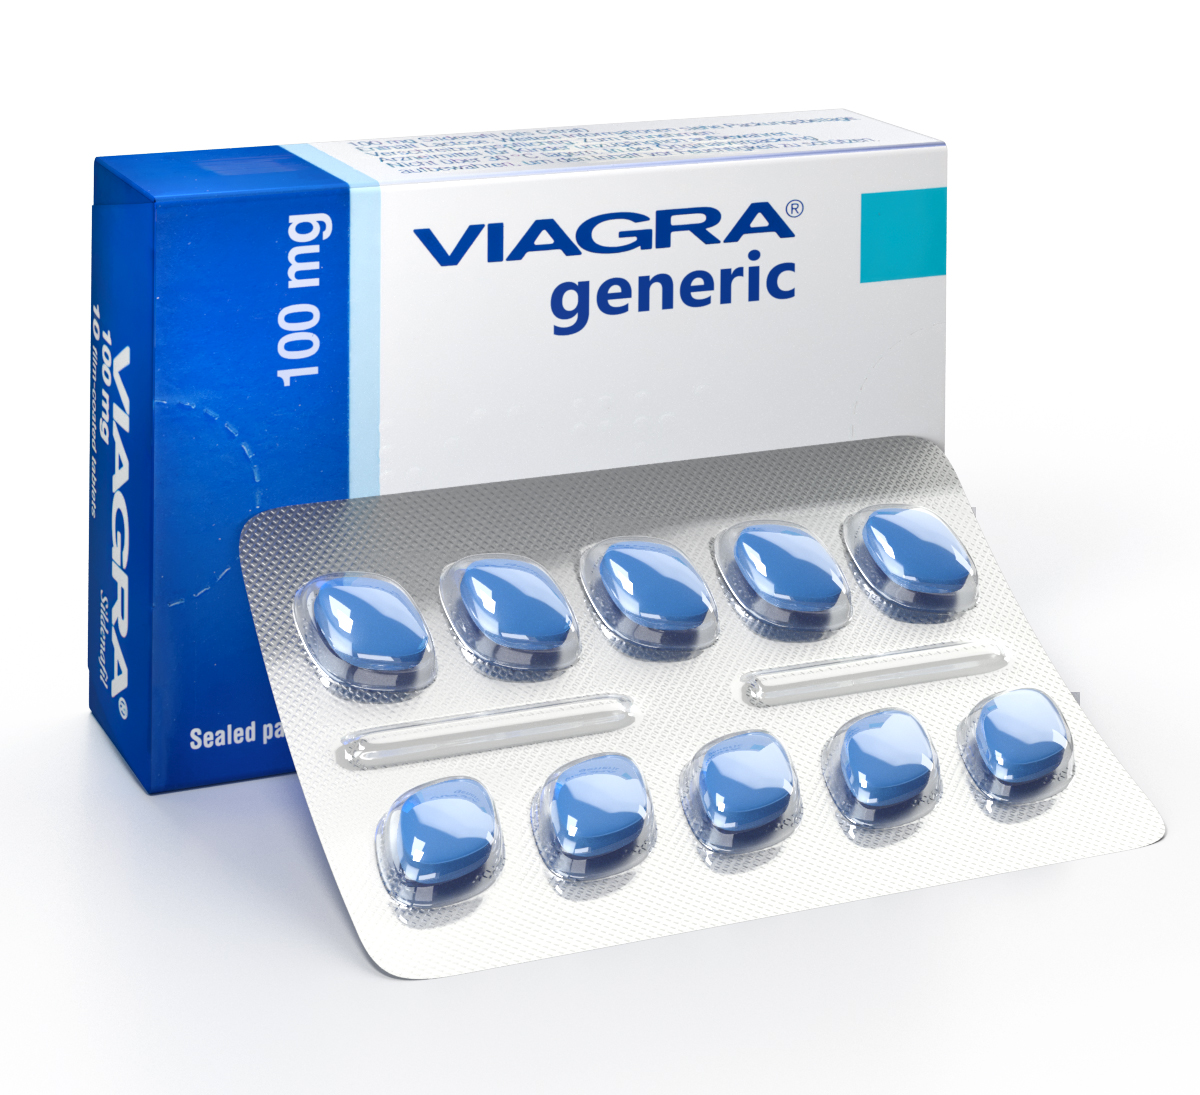 Viagra Generika kaufen